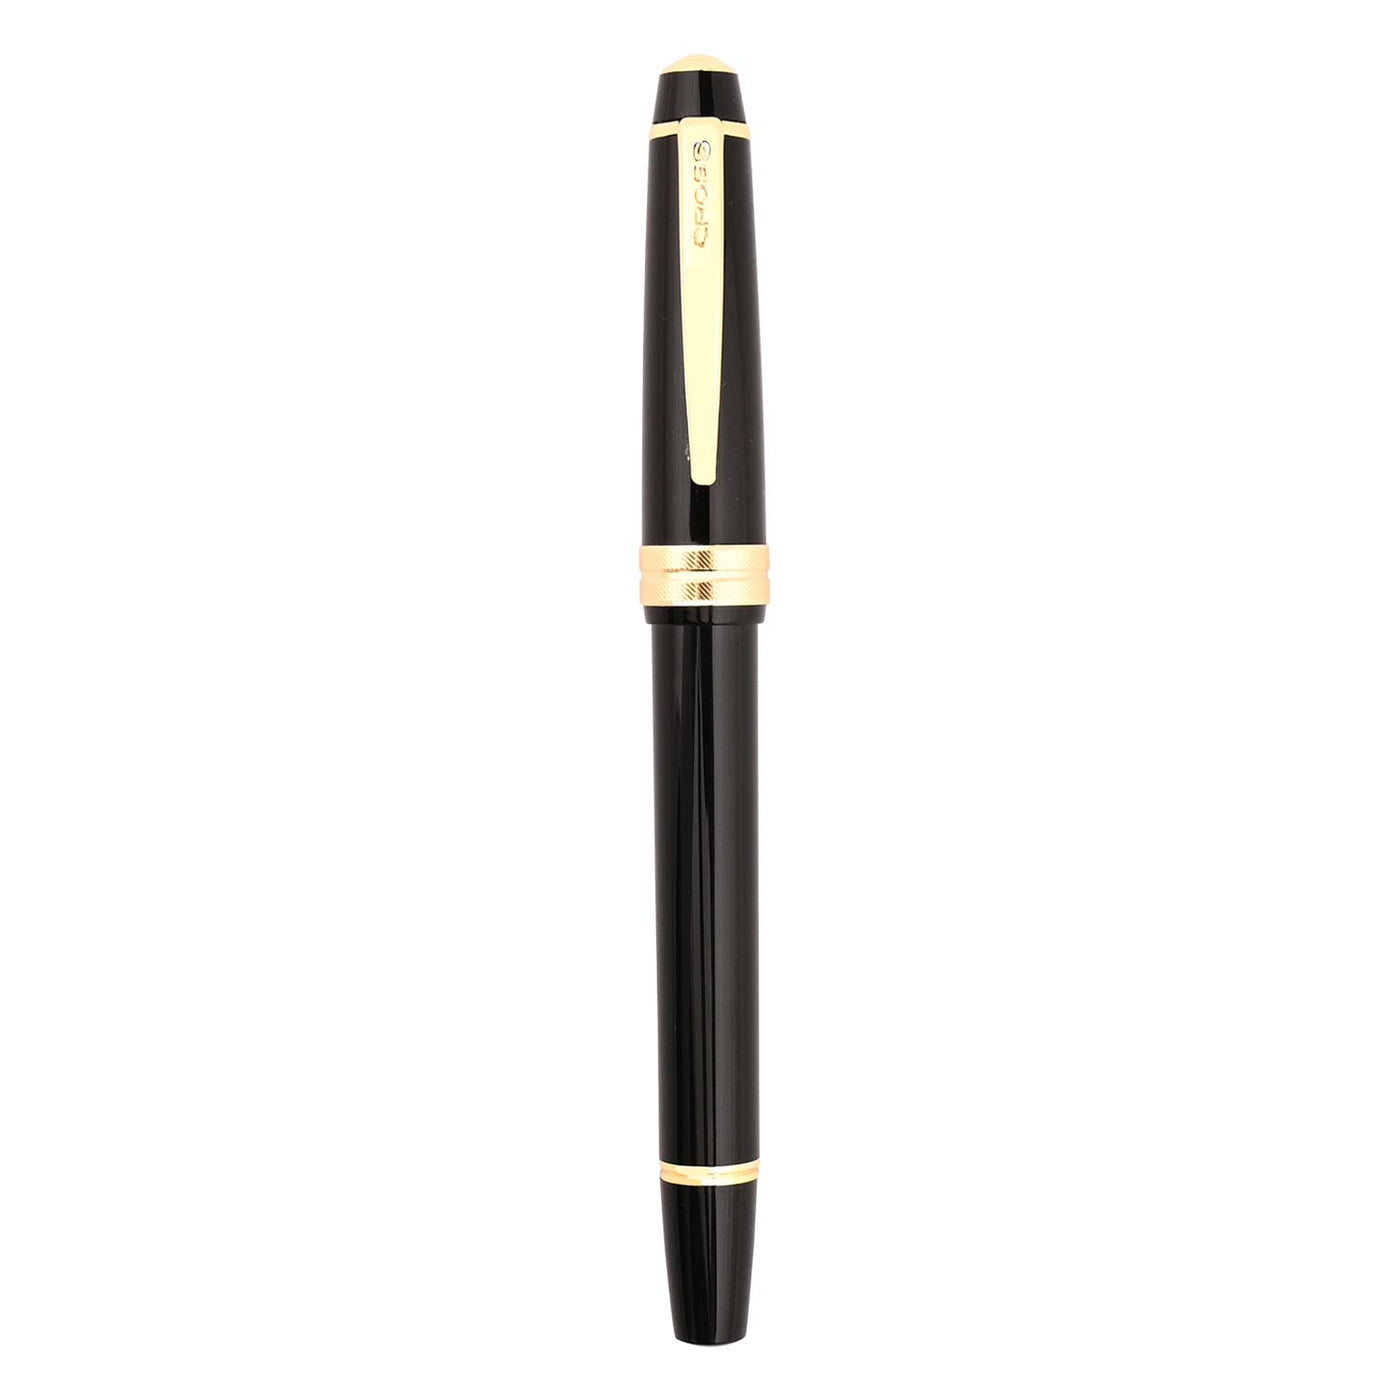 Cross Bailey Light Roller Ball Pen - Black GT 6